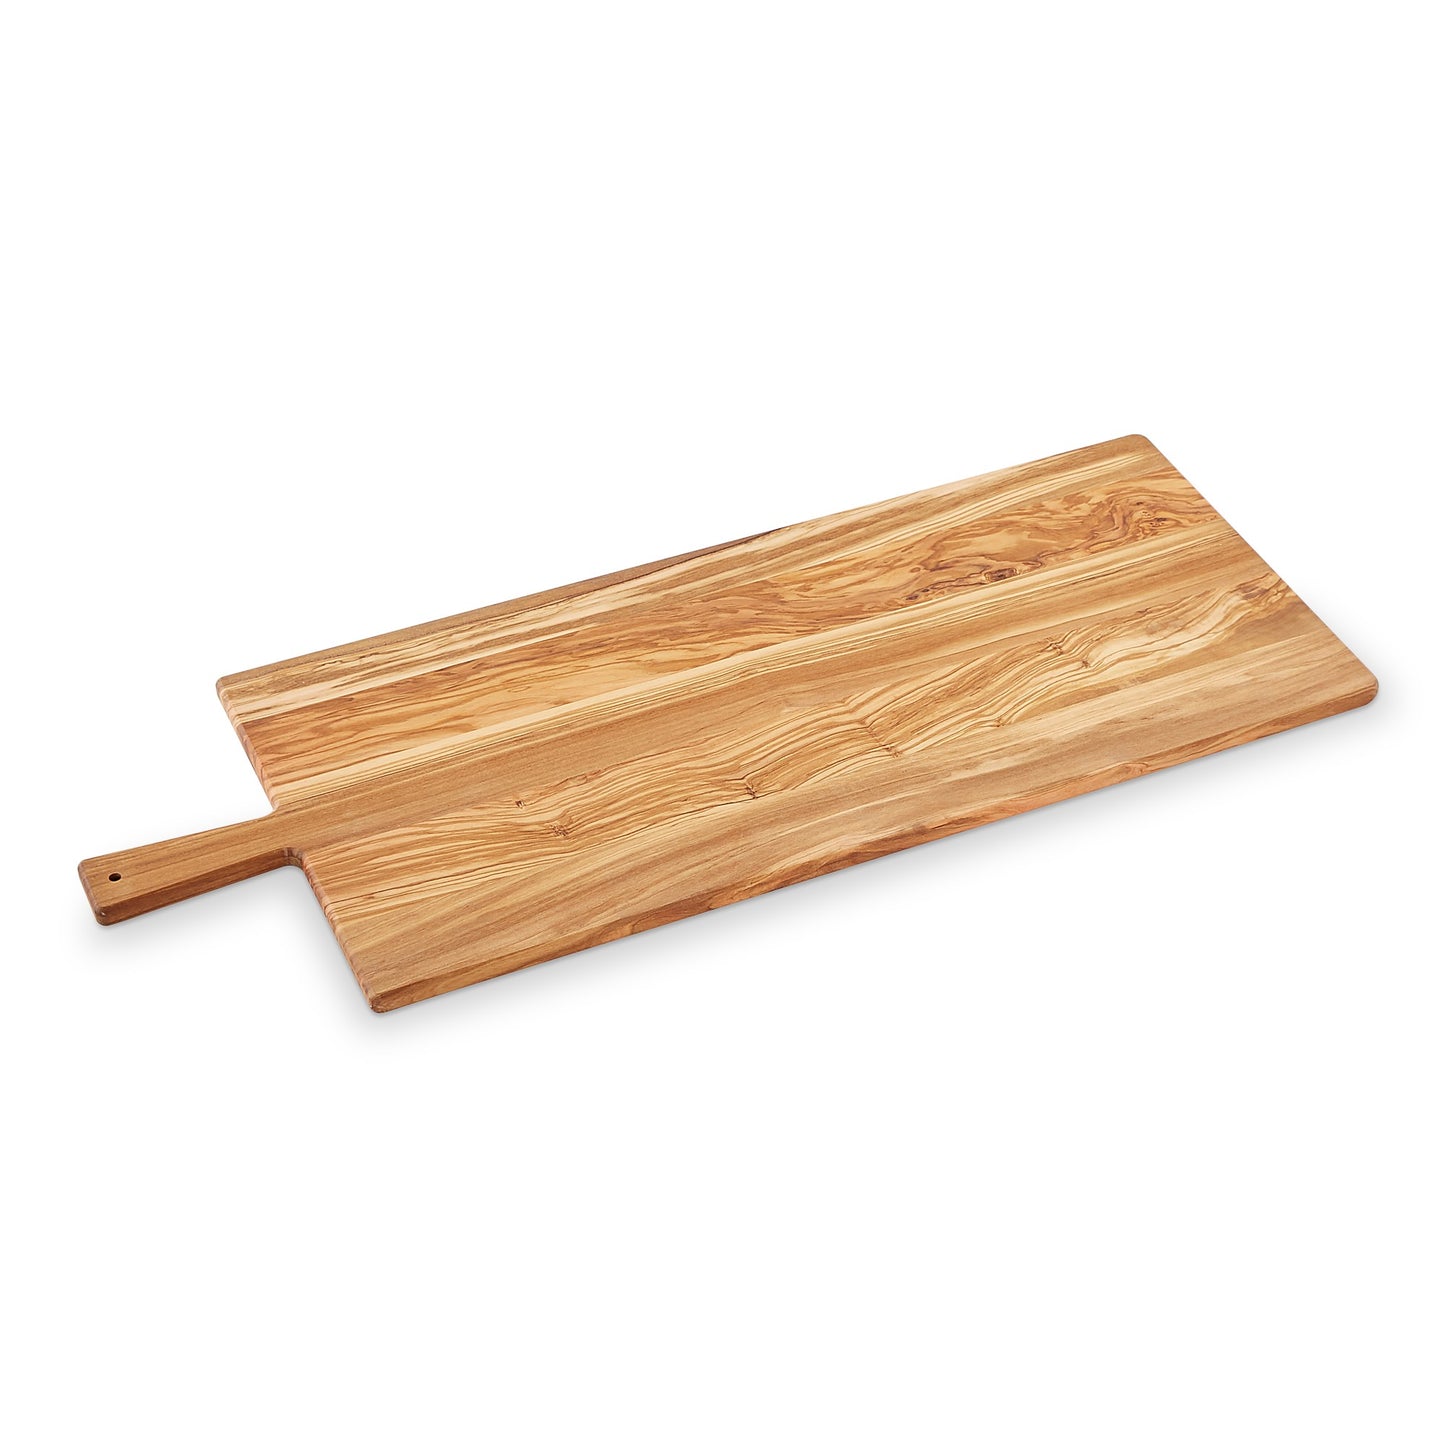 Olivewood Rectangular Cheese Board- Extra Large size